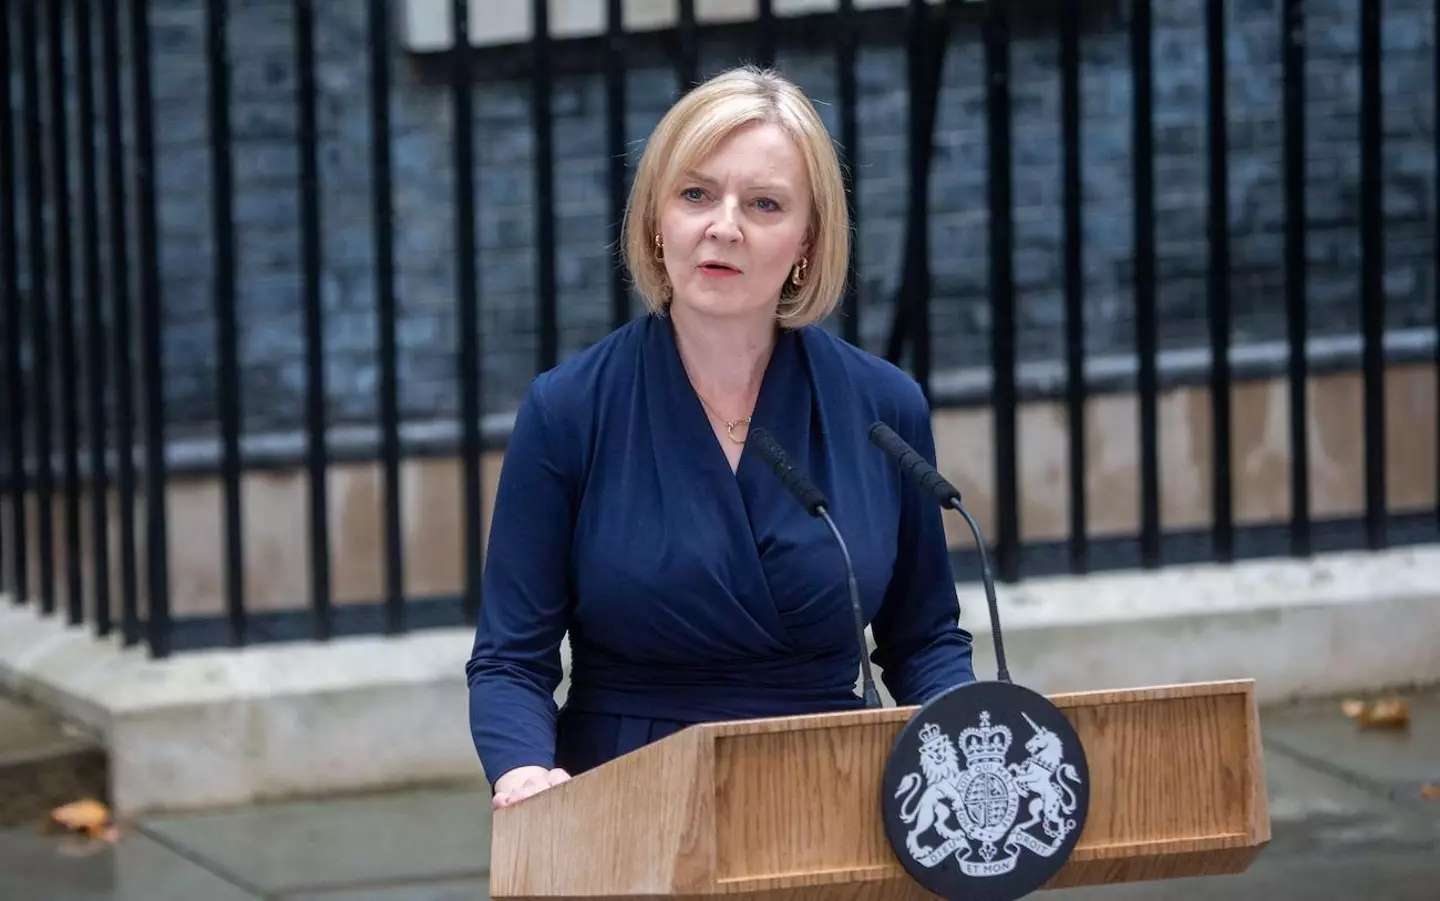 Liz Truss speaks outside 10 Downing Street as the new Prime Minister of the UK.